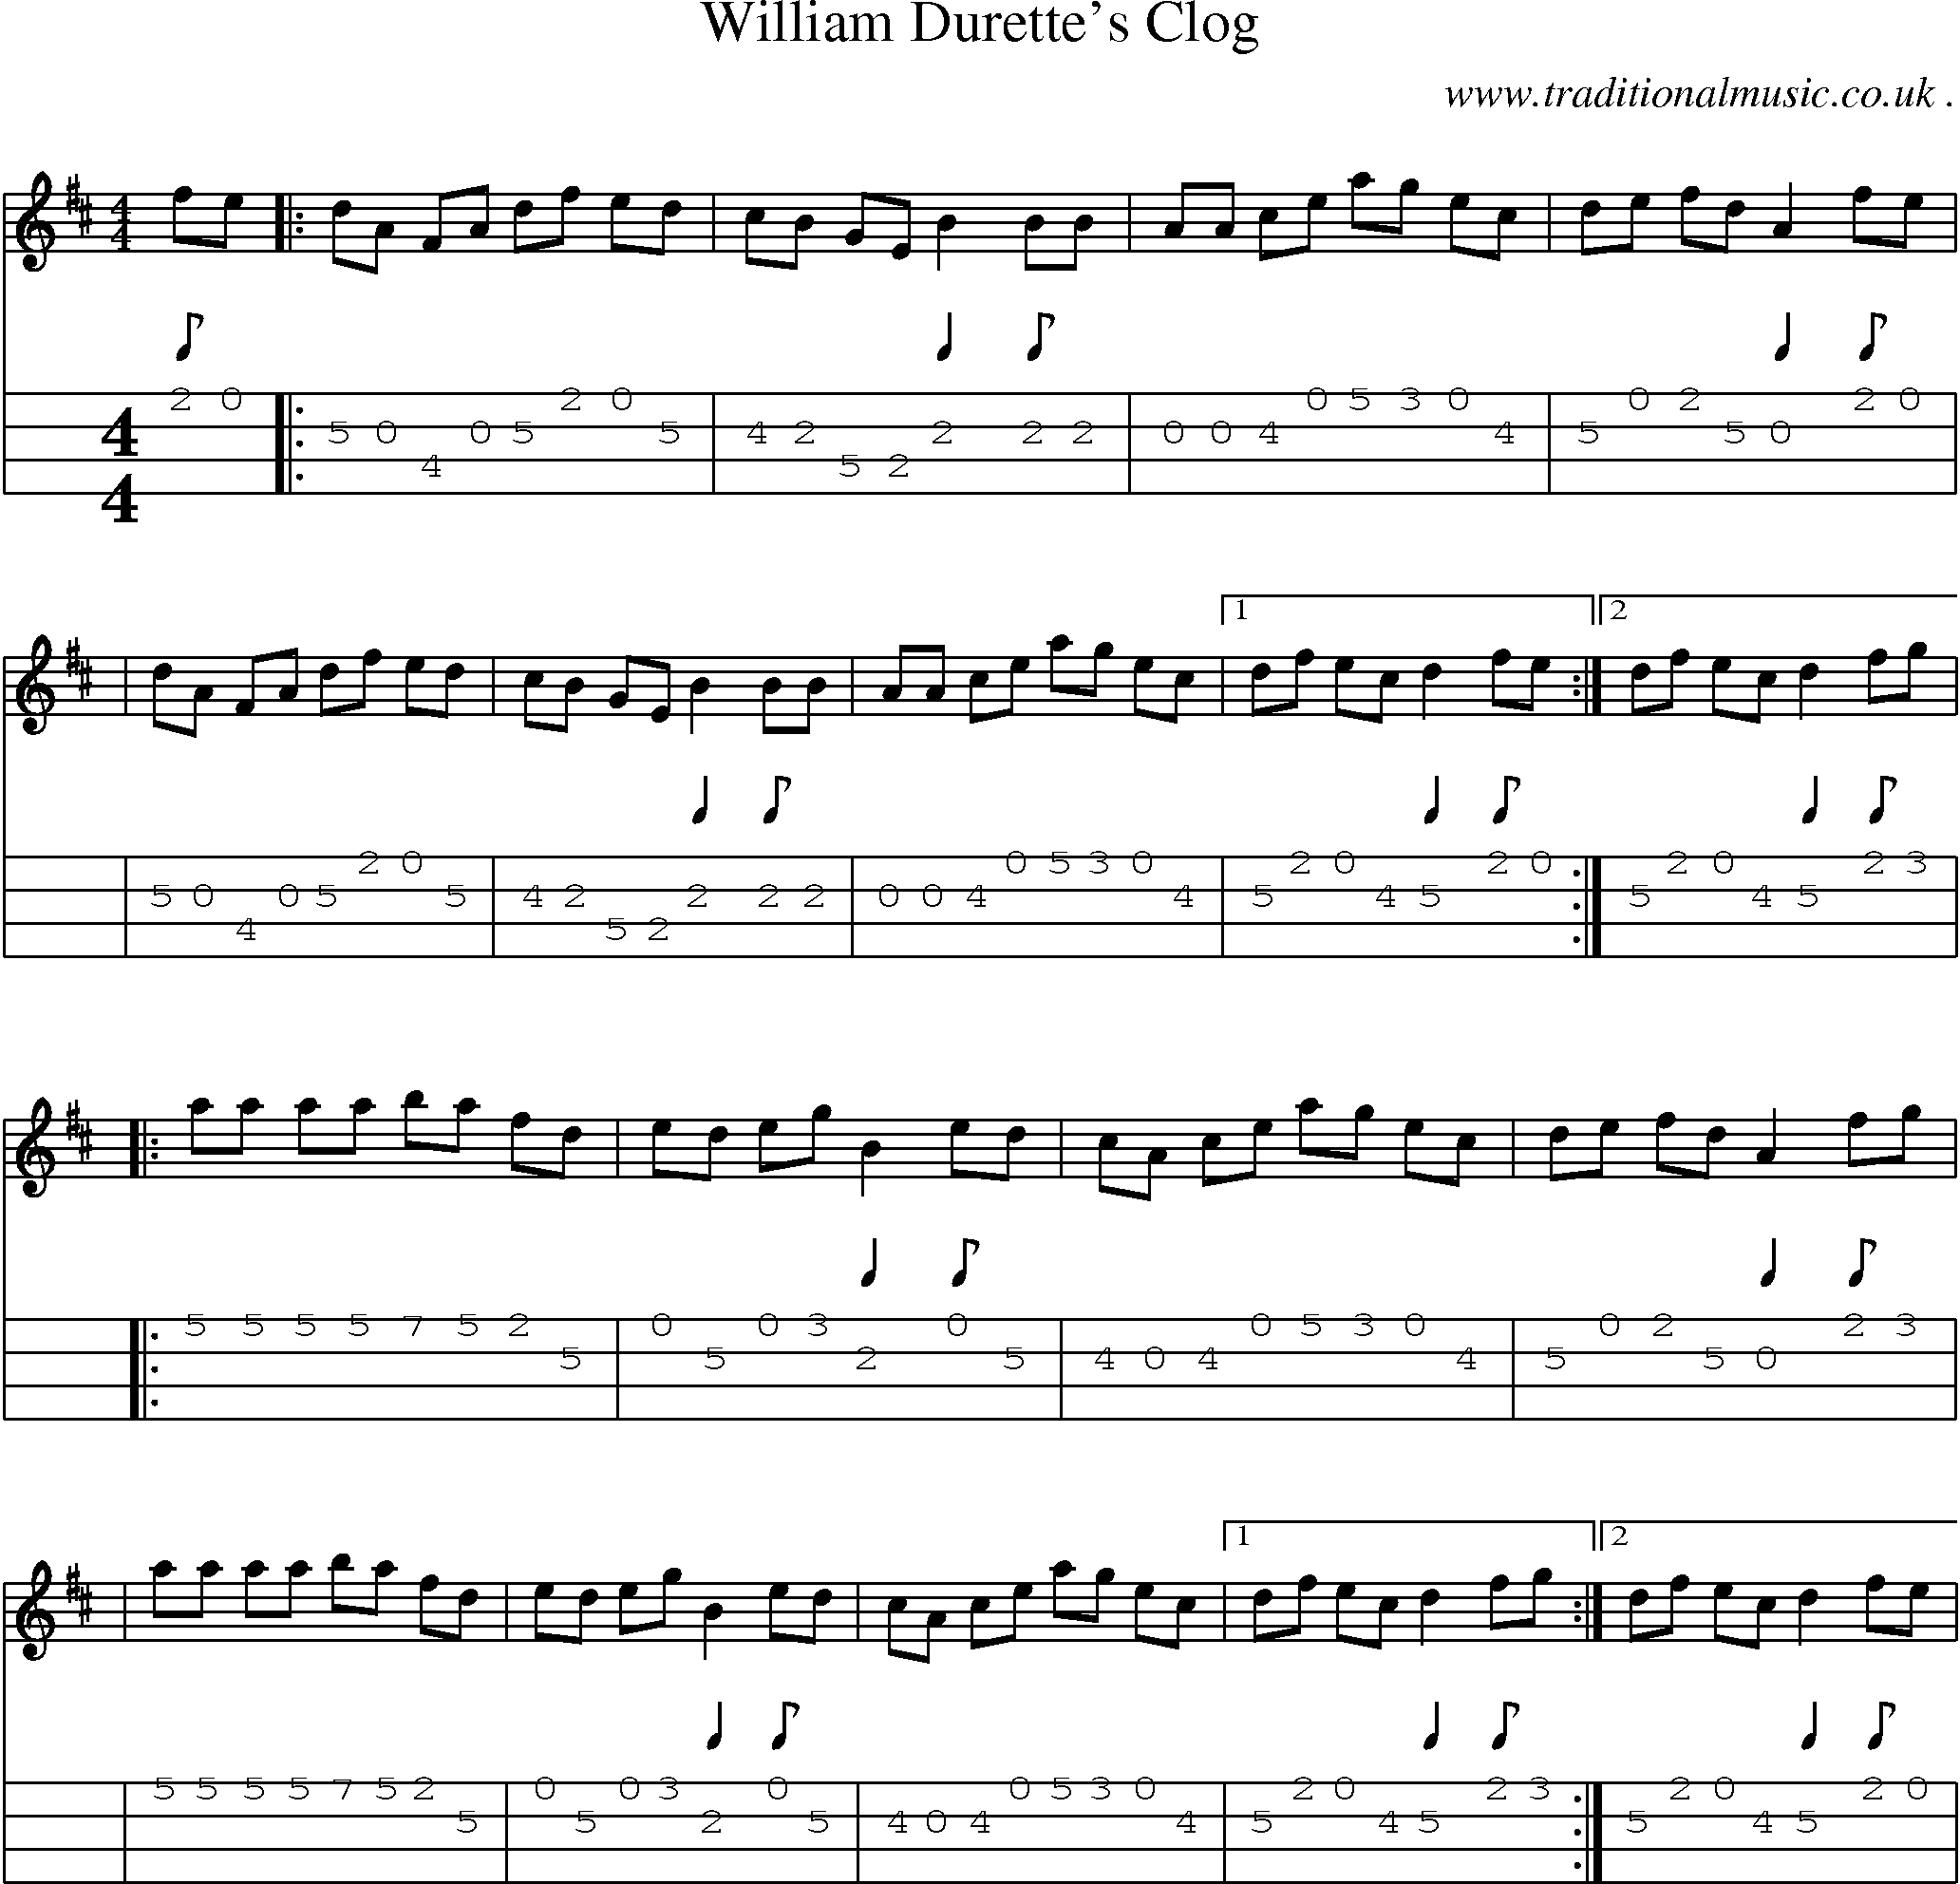 Sheet-Music and Mandolin Tabs for William Durettes Clog